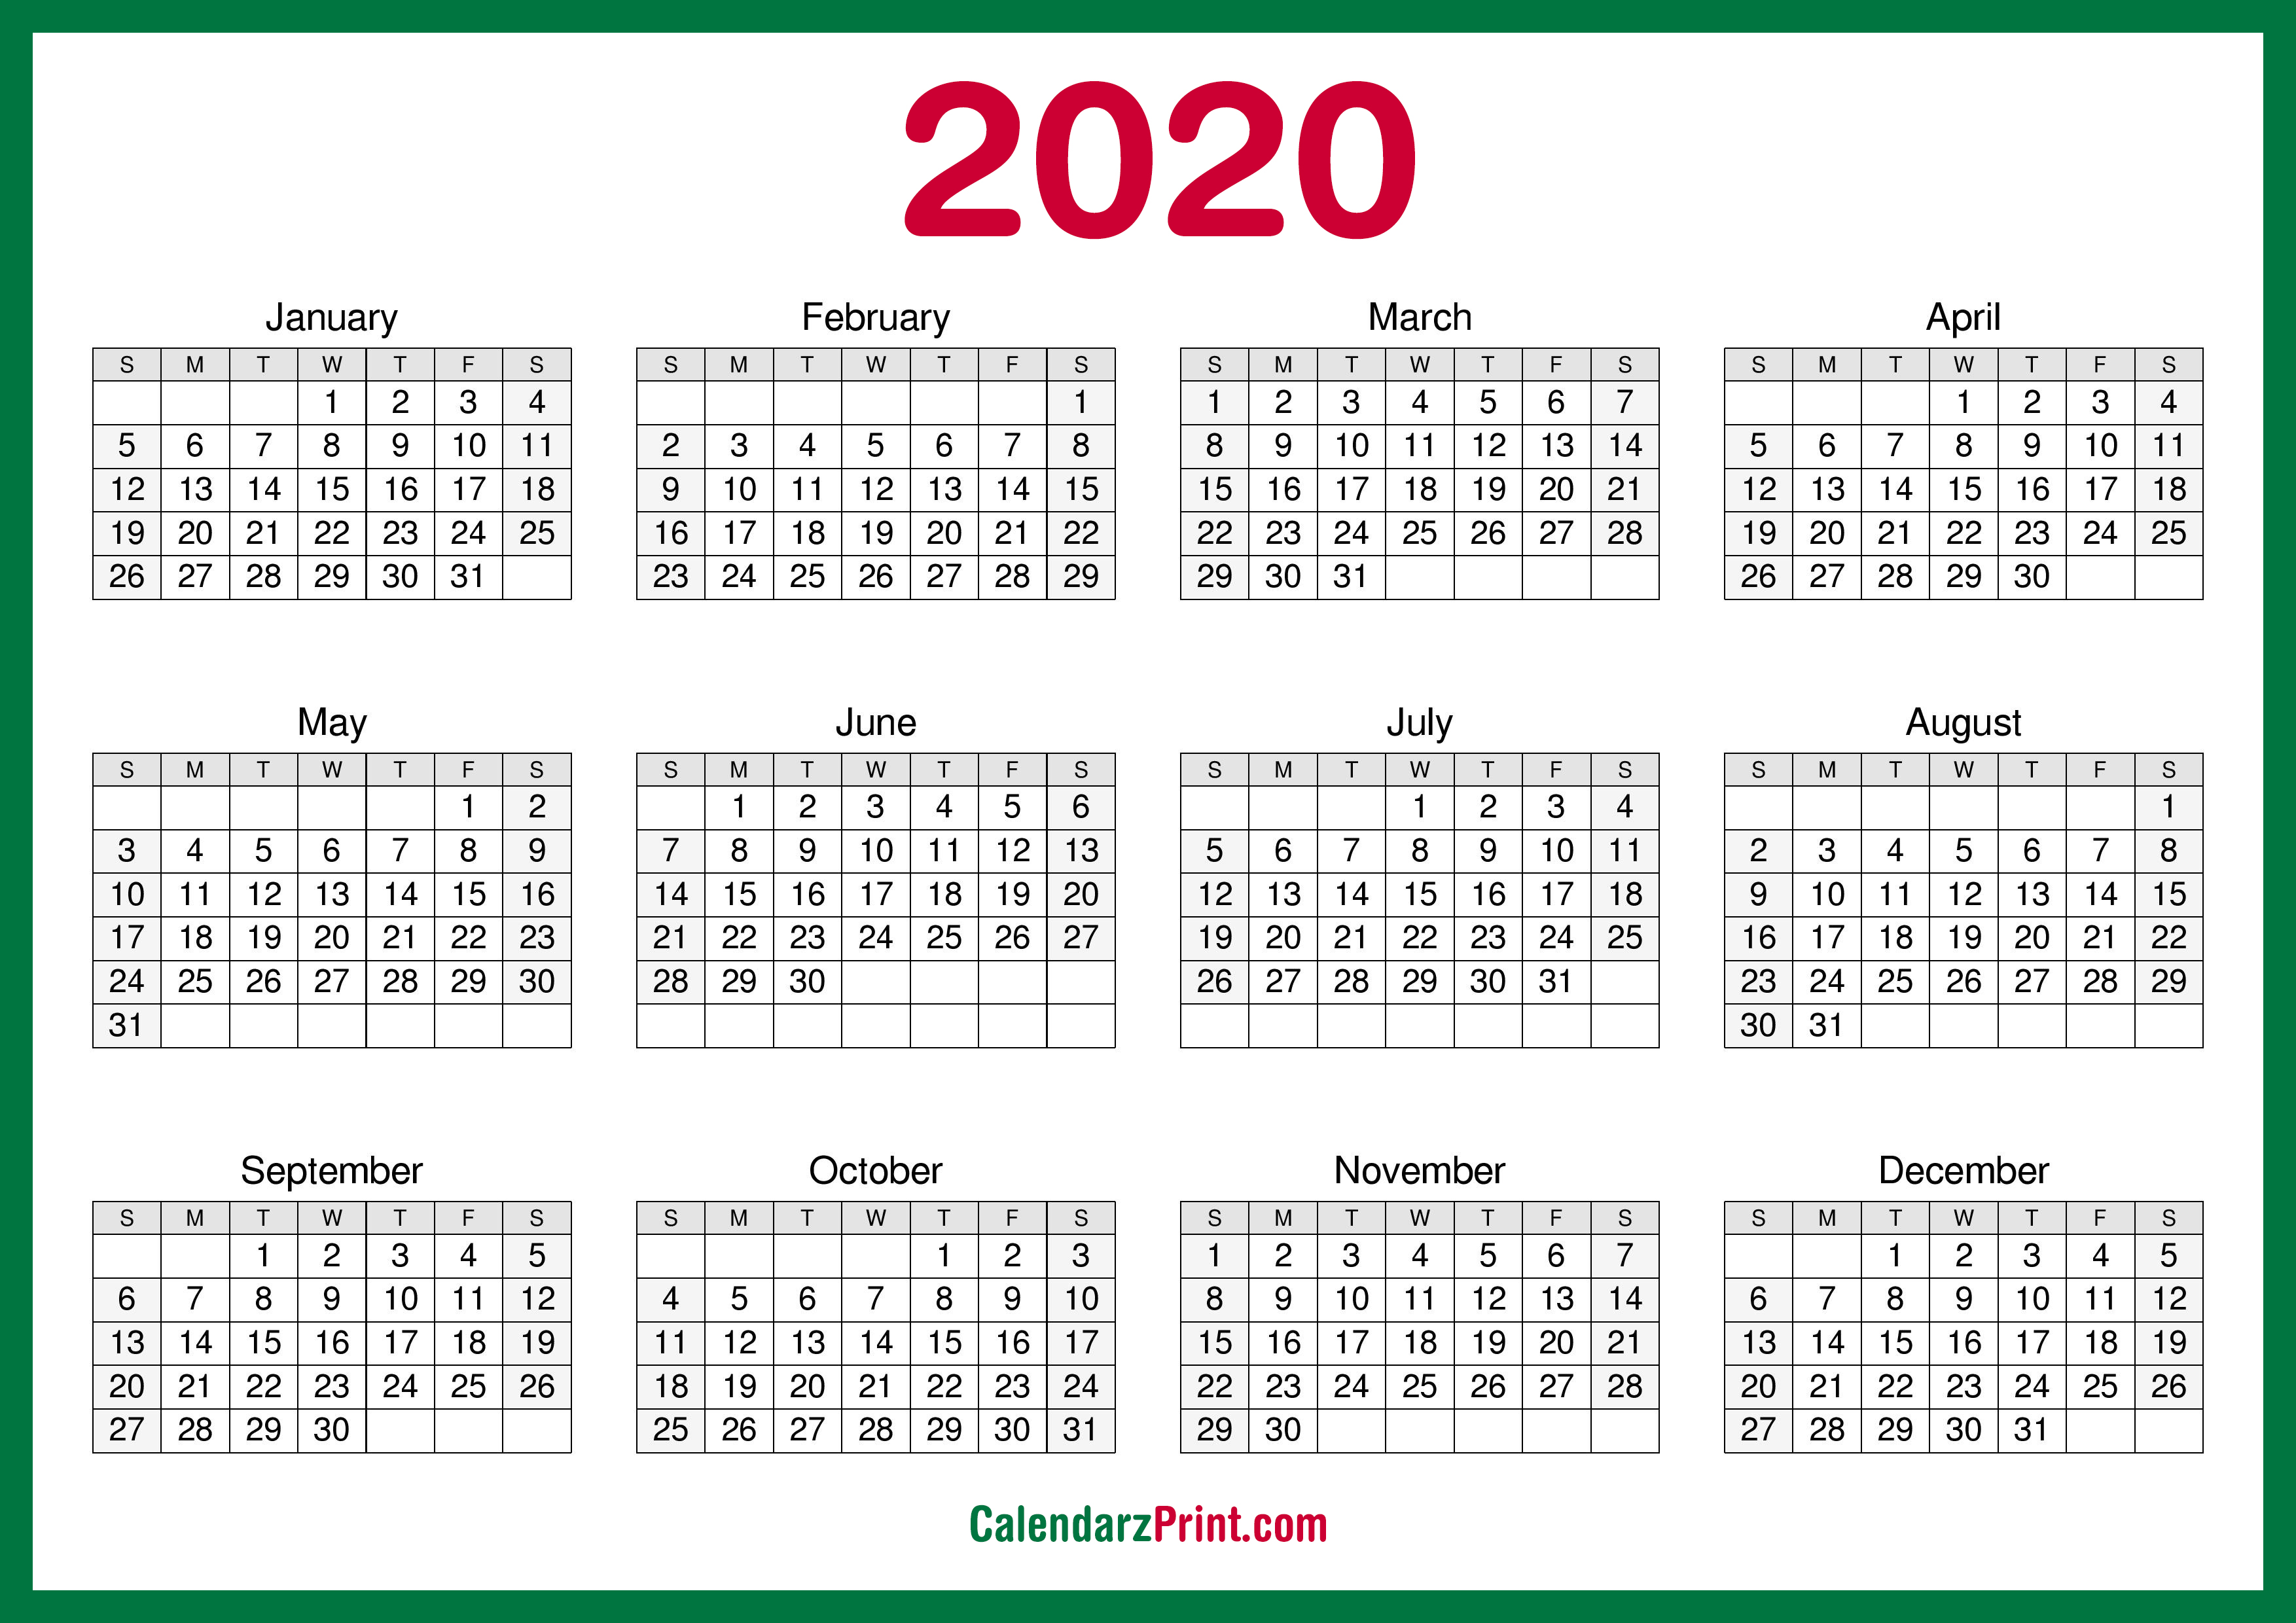 Printable 2020 Calendar – CalendarzPrint | Free Calendars, Printable ...